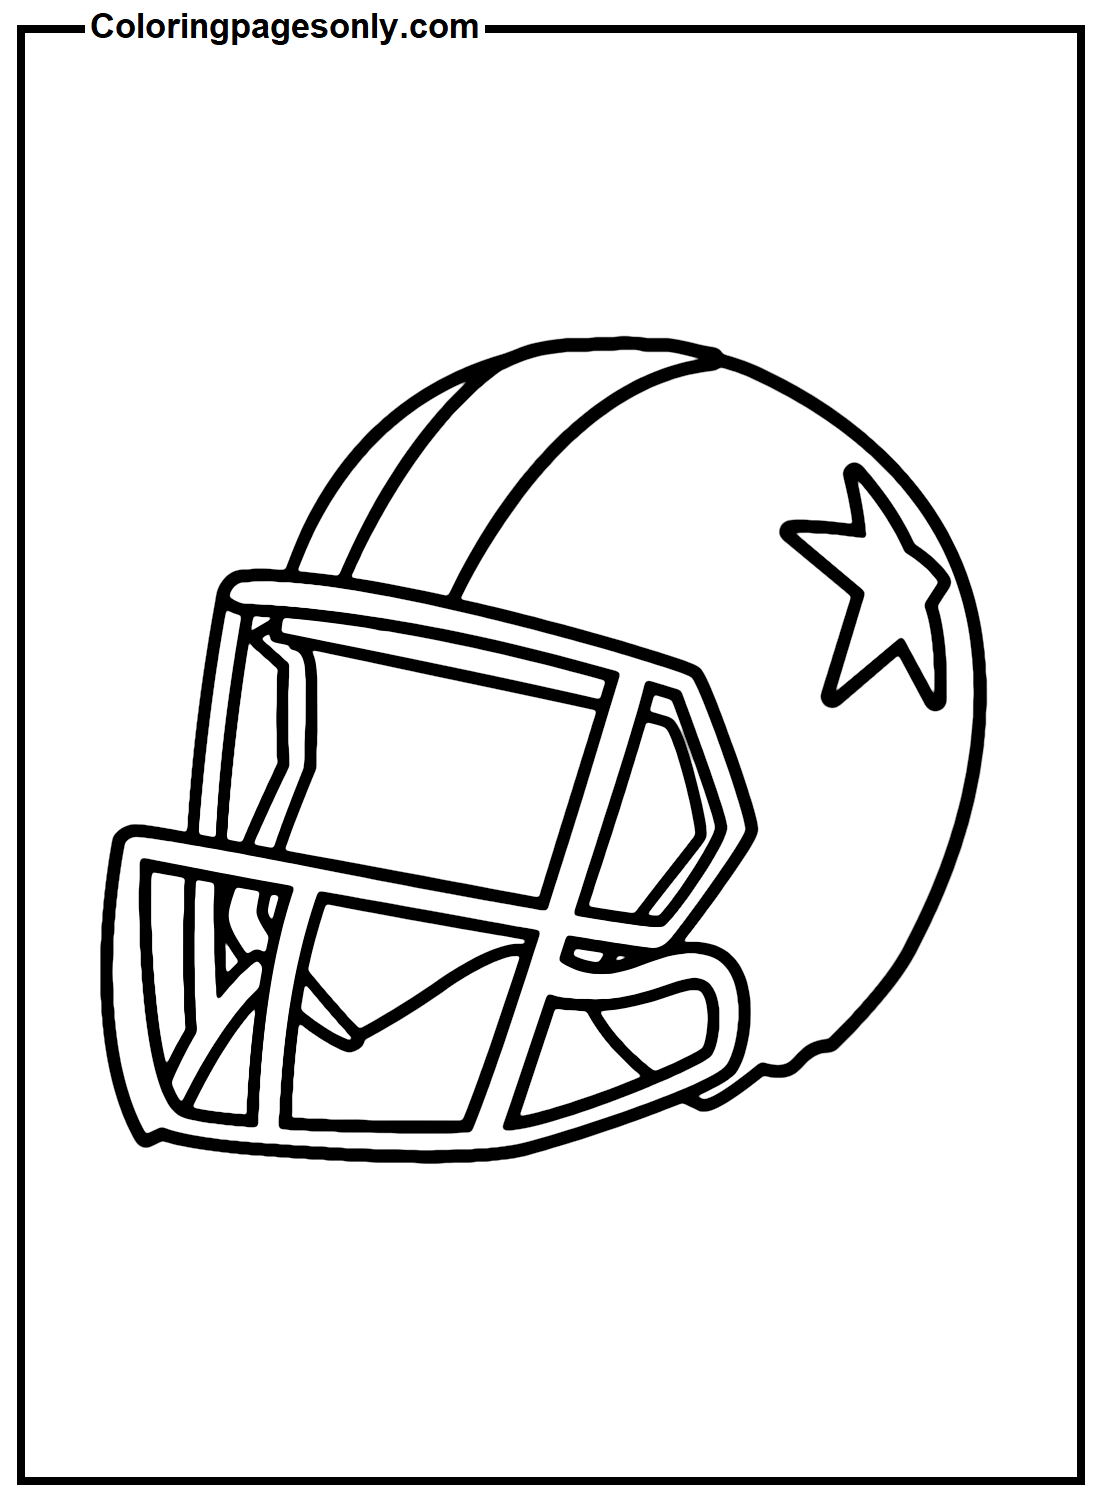 Super Bowl Helmet Image Coloring Pages